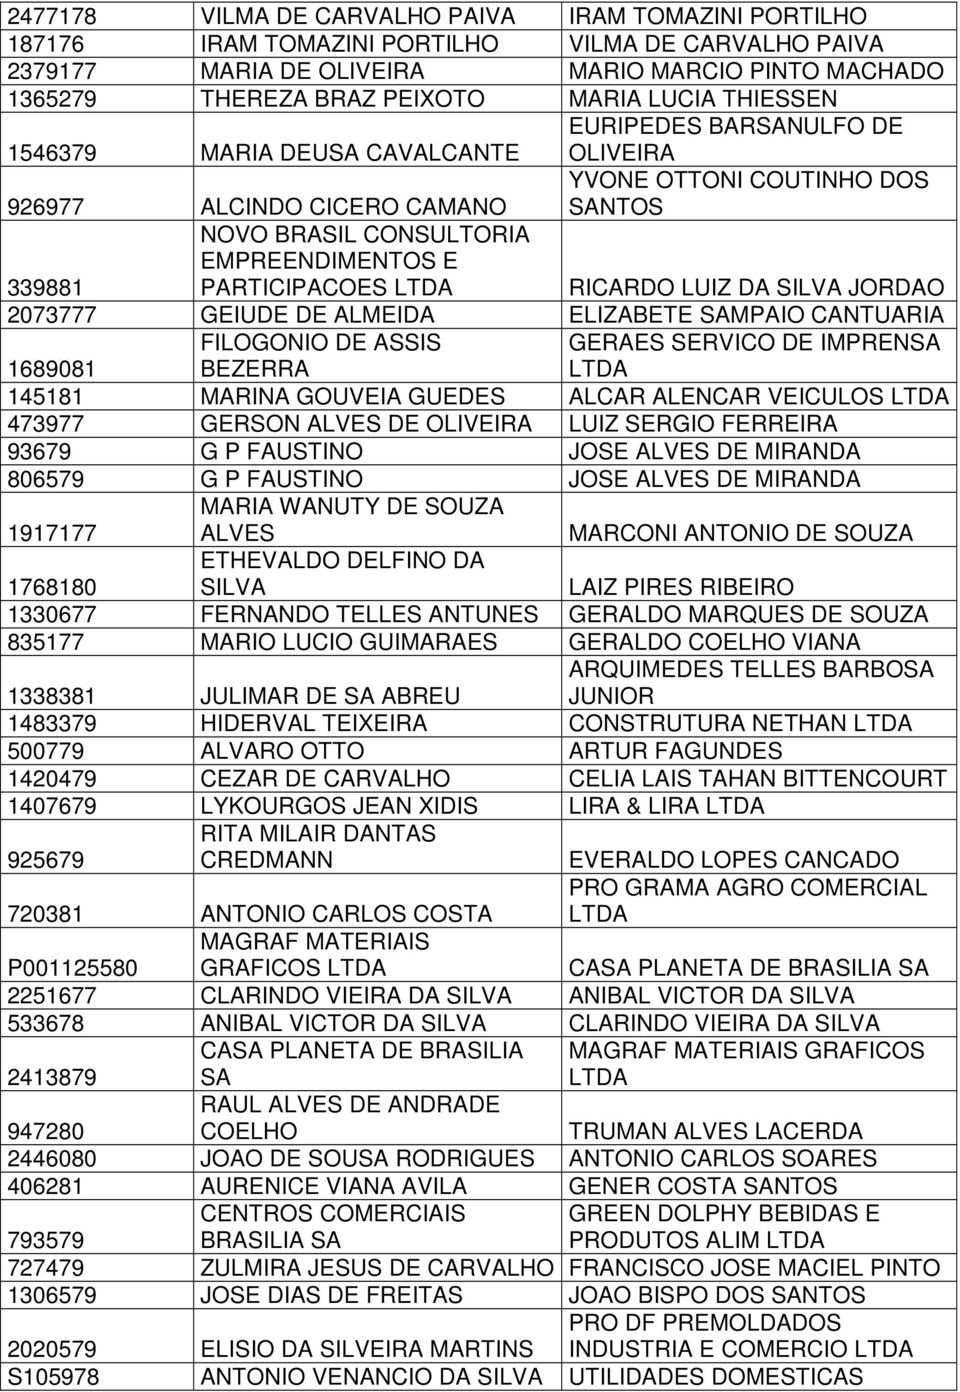 PARTICIPACOES RICARDO LUIZ DA SILVA JORDAO 2073777 GEIUDE DE ALMEIDA ELIZABETE SAMPAIO CANTUARIA FILOGONIO DE ASSIS GERAES SERVICO DE IMPRENSA 1689081 BEZERRA 145181 MARINA GOUVEIA GUEDES ALCAR